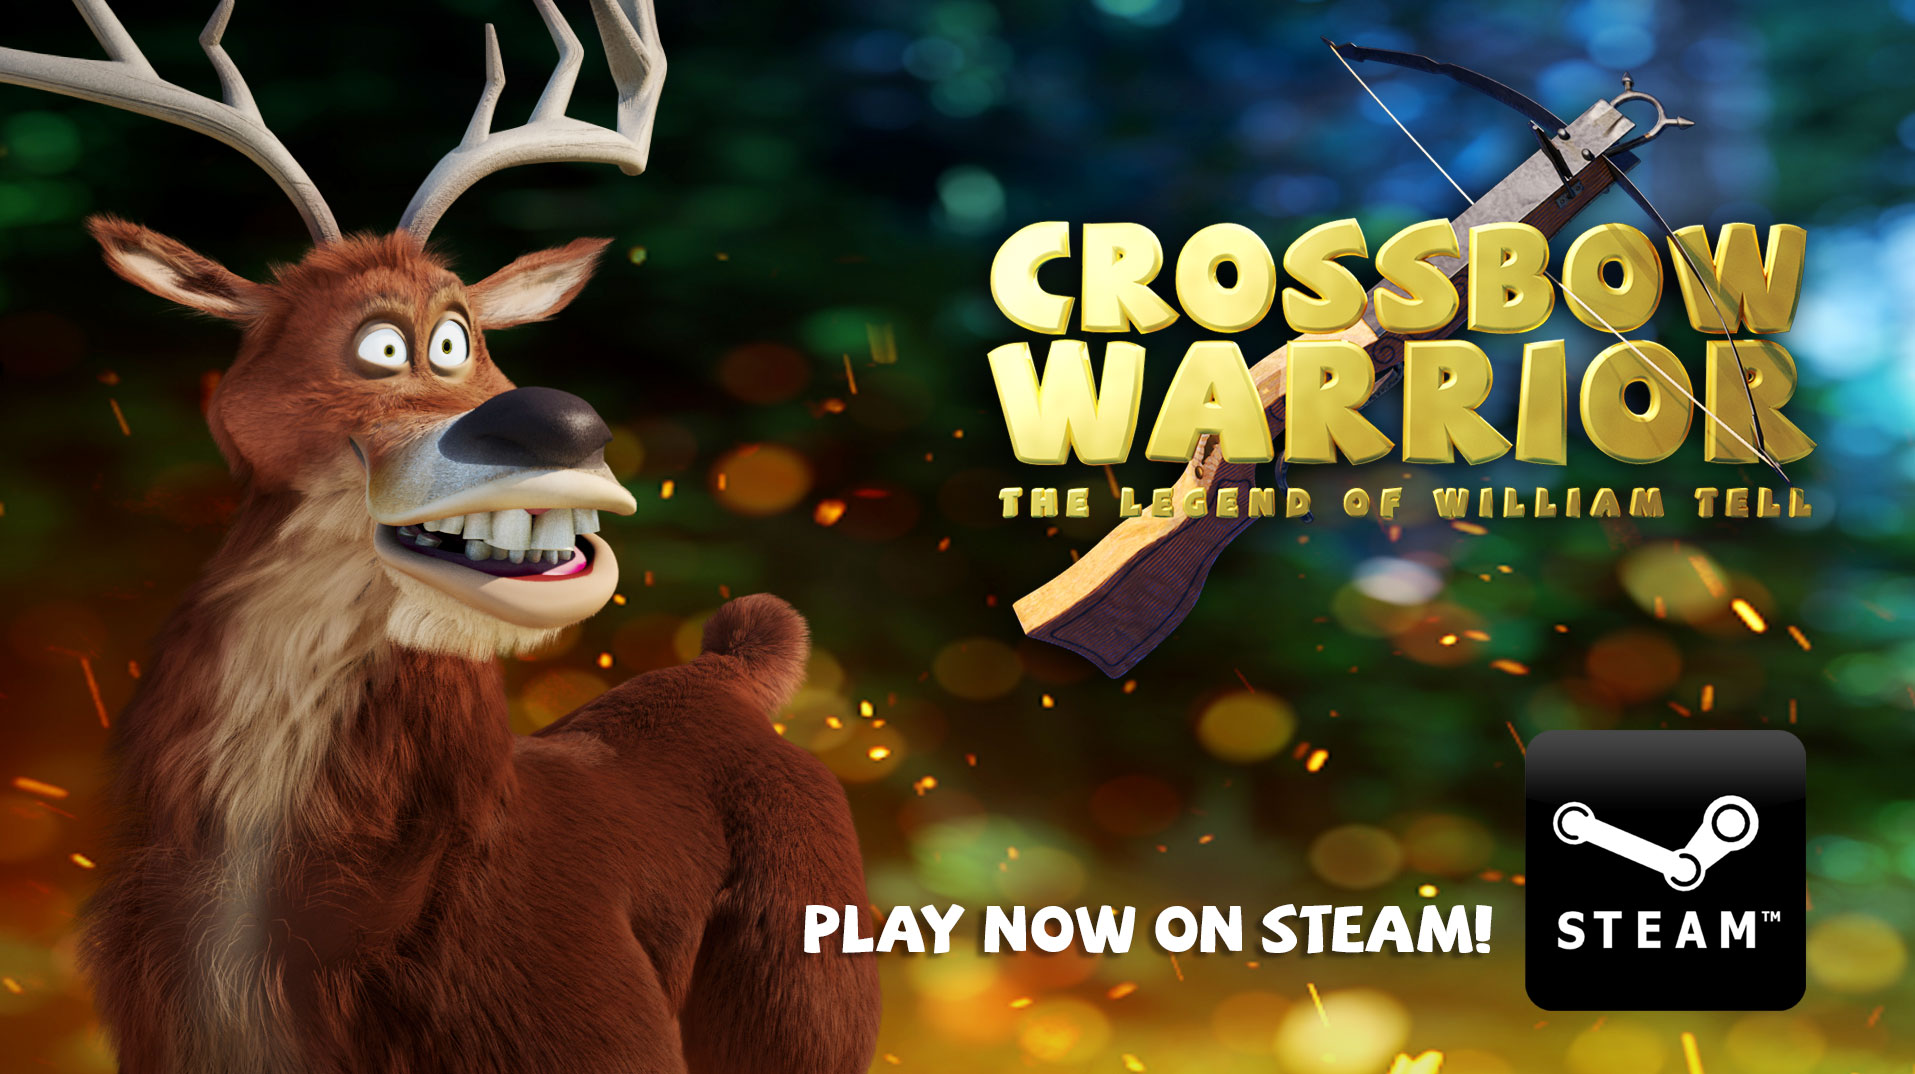 Crossbow Warrior - The Legend of William Tell screenshot